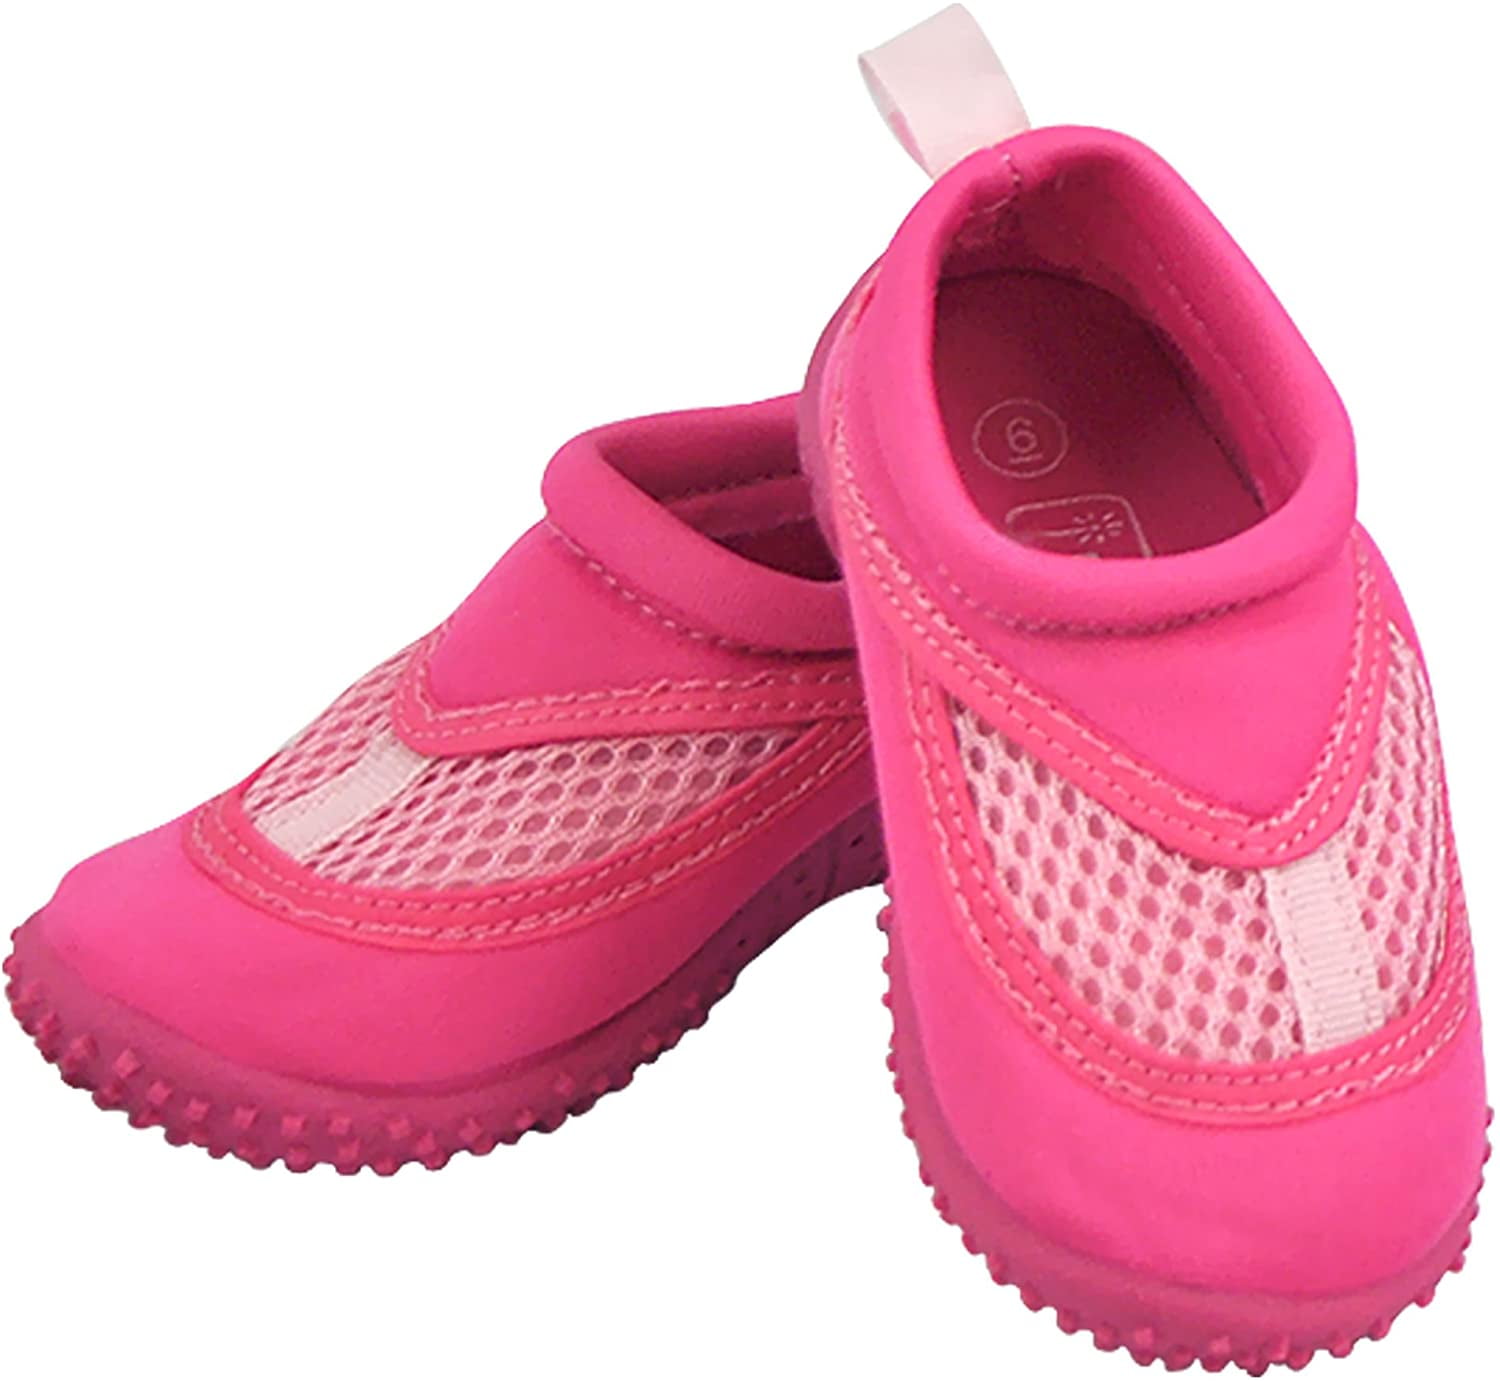 Baby Girls Hello Kitty Sandals Kids Pink White Beach Summer Shoes Size 4 4.5 5 6 